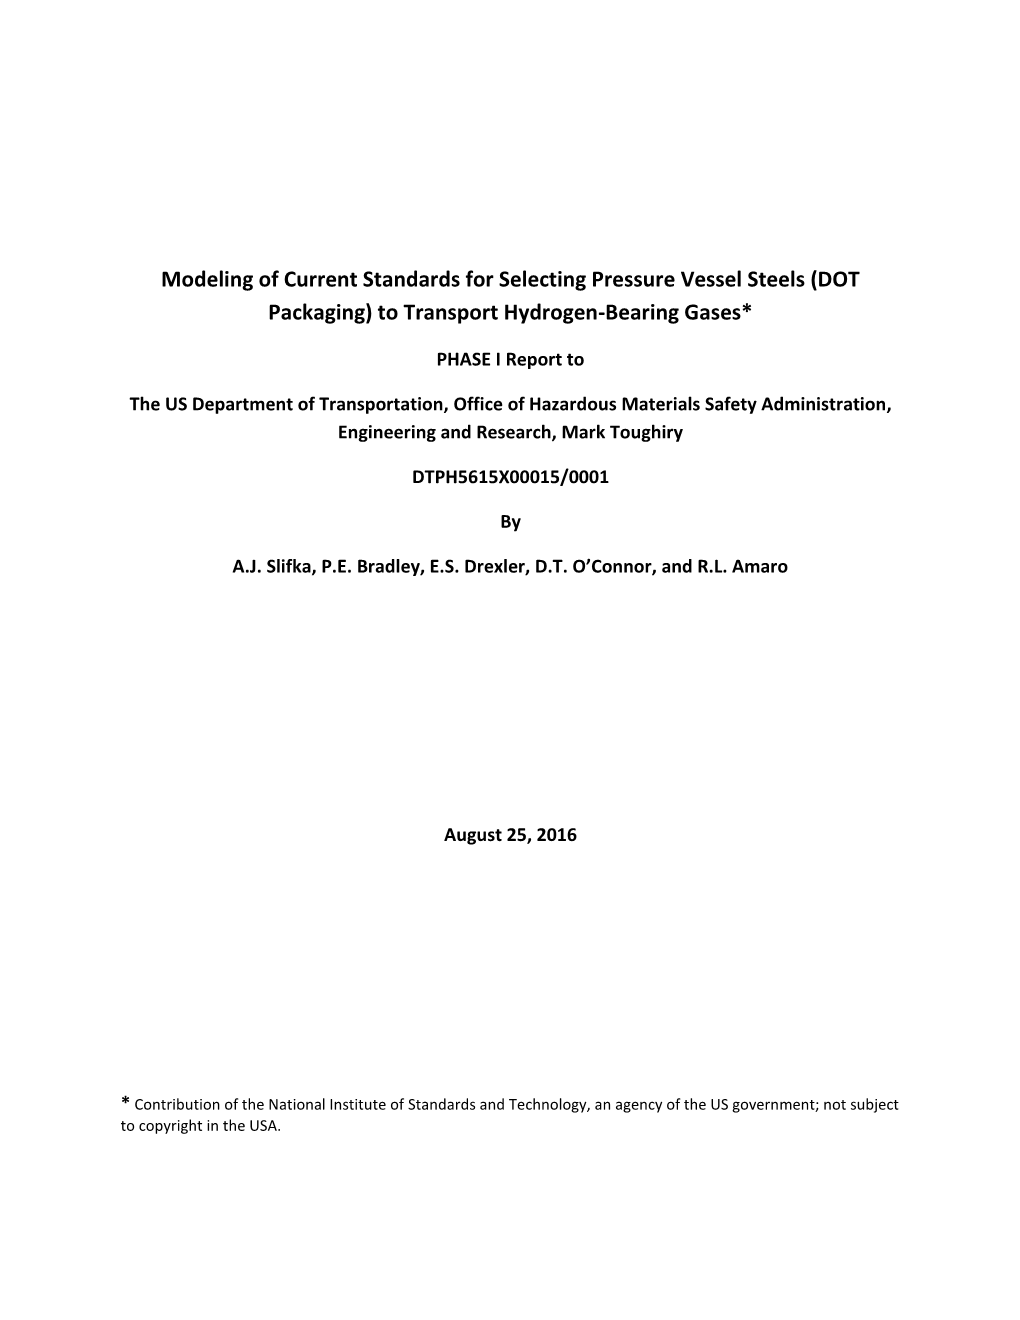 Modeling of Current Standards for Selecting Pressure Vessel Steels (DOT Packaging) to Transport Hydrogen-Bearing Gases*